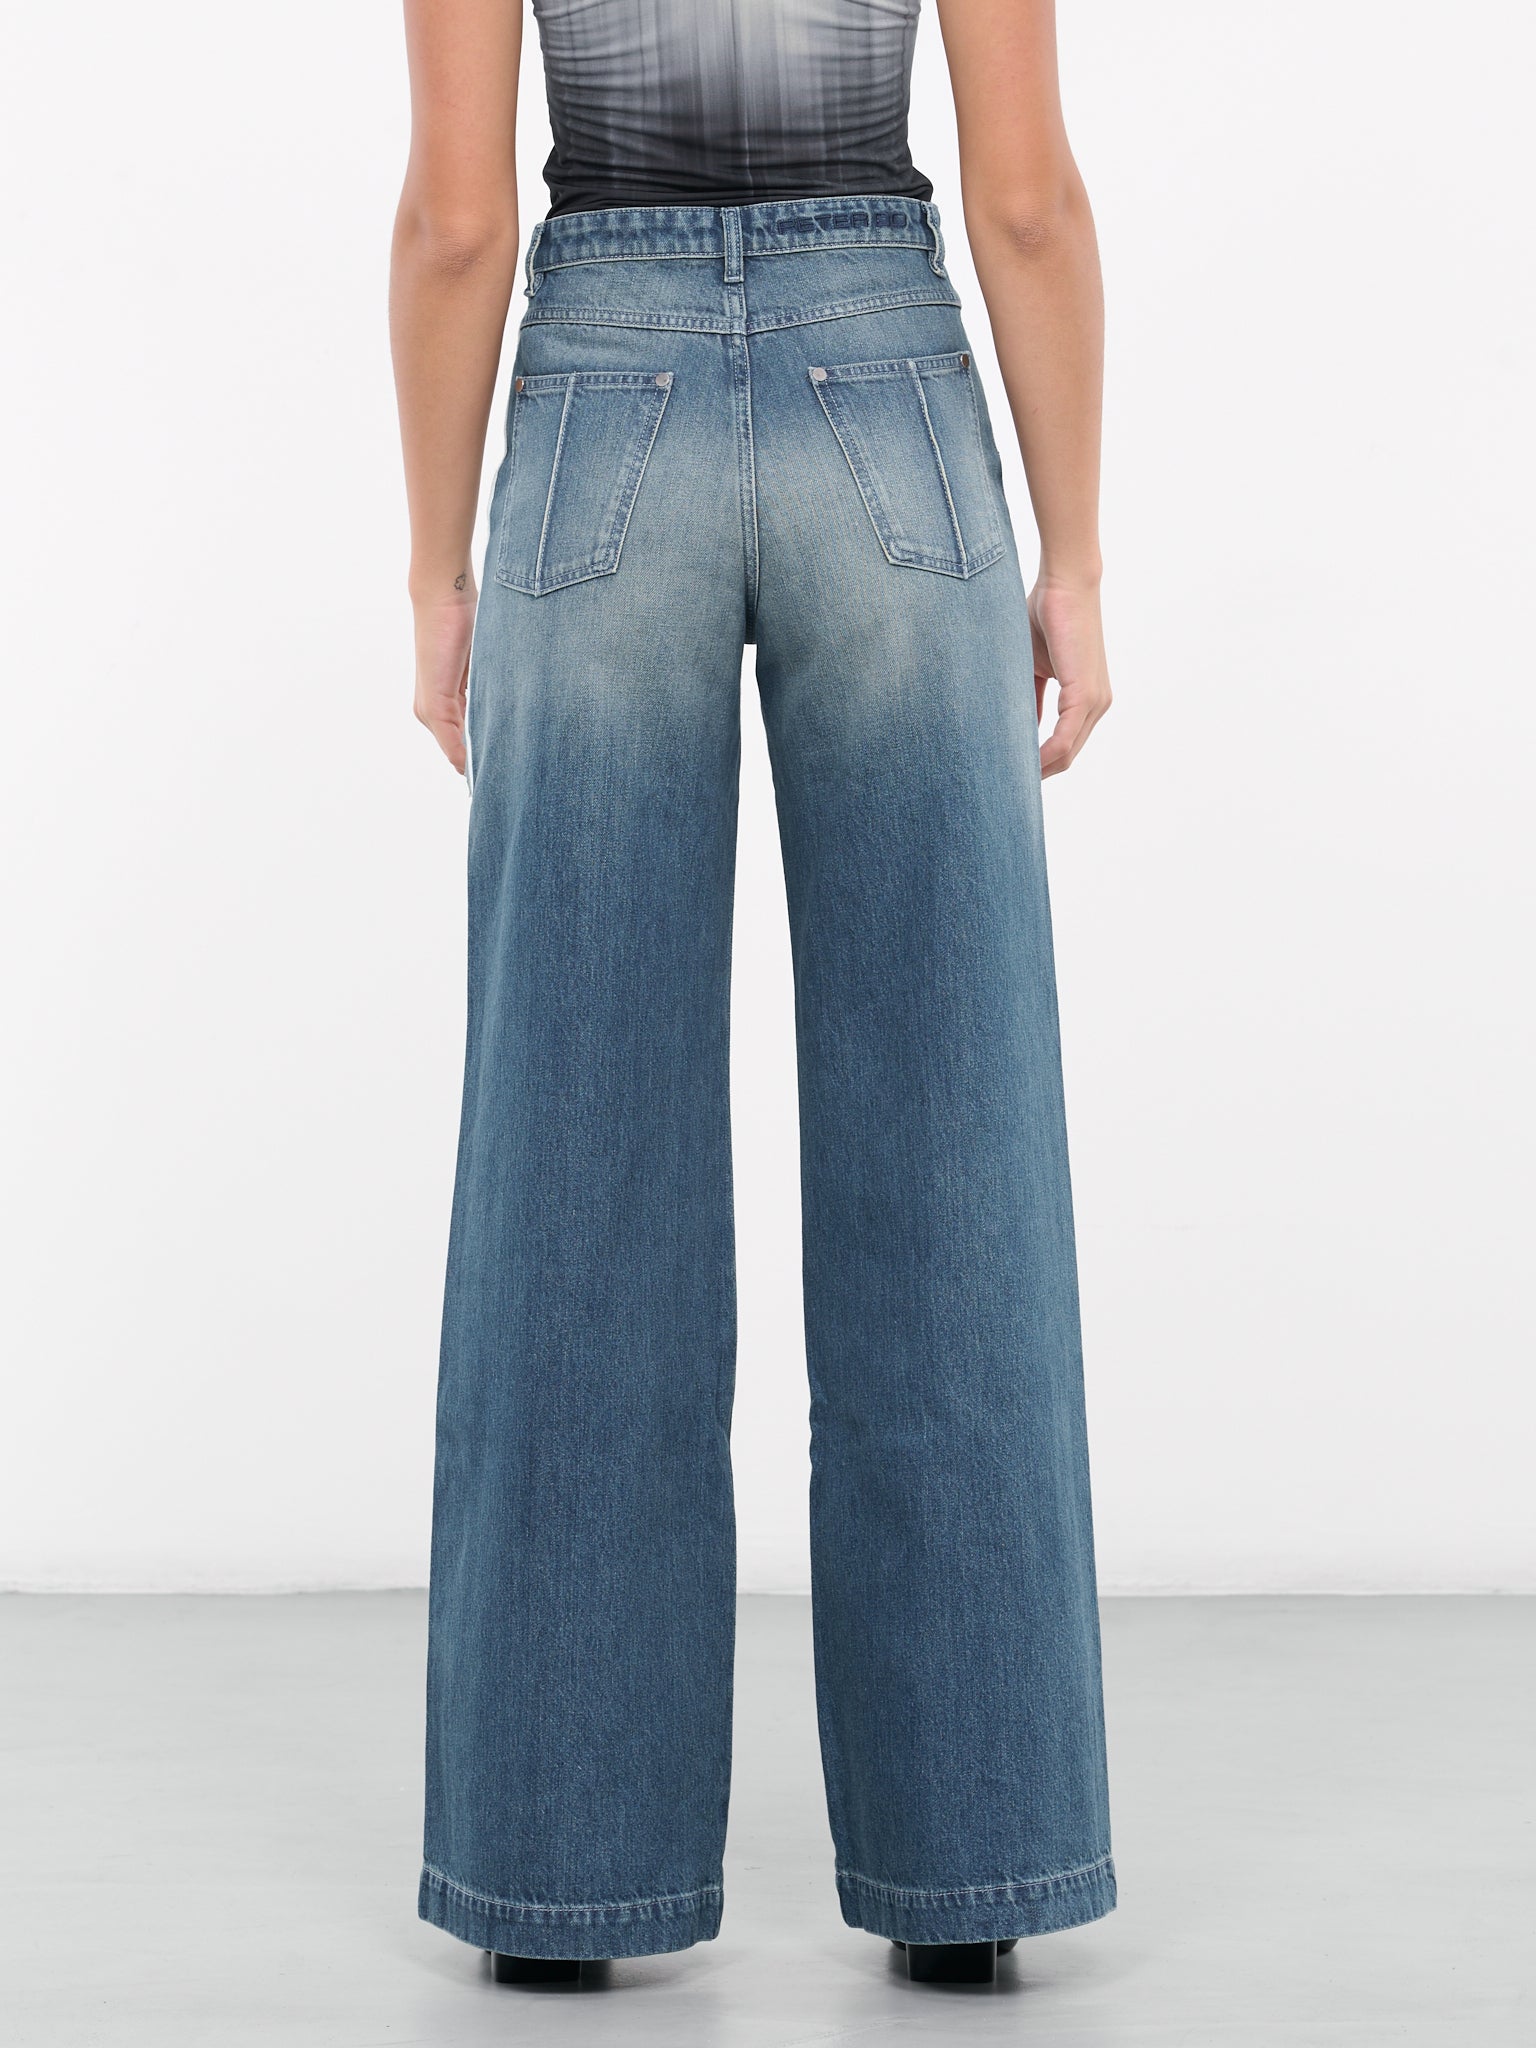 Ripped Jeans (PD-U-171-DE-POWDER-BLUE)